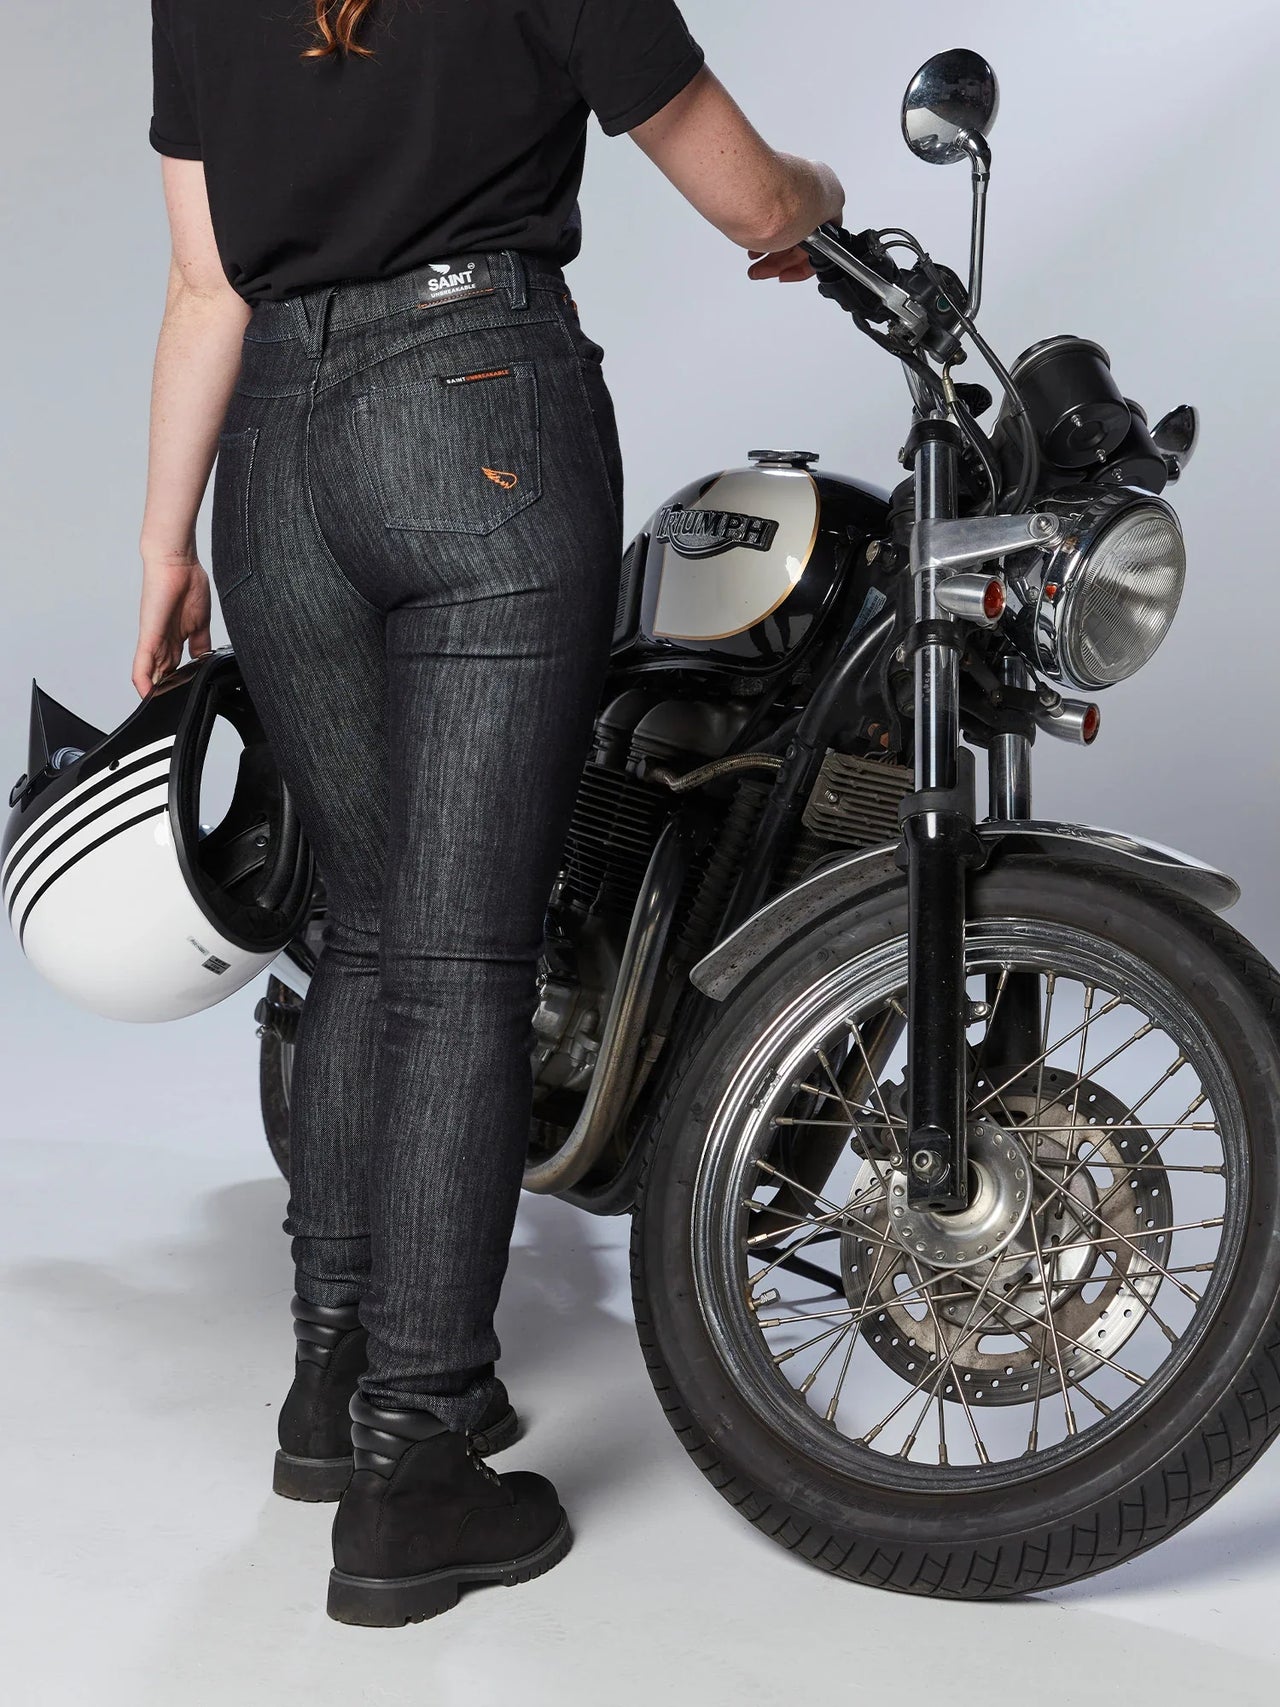 Jean moto femme slim anthracite - Les Bikeuses